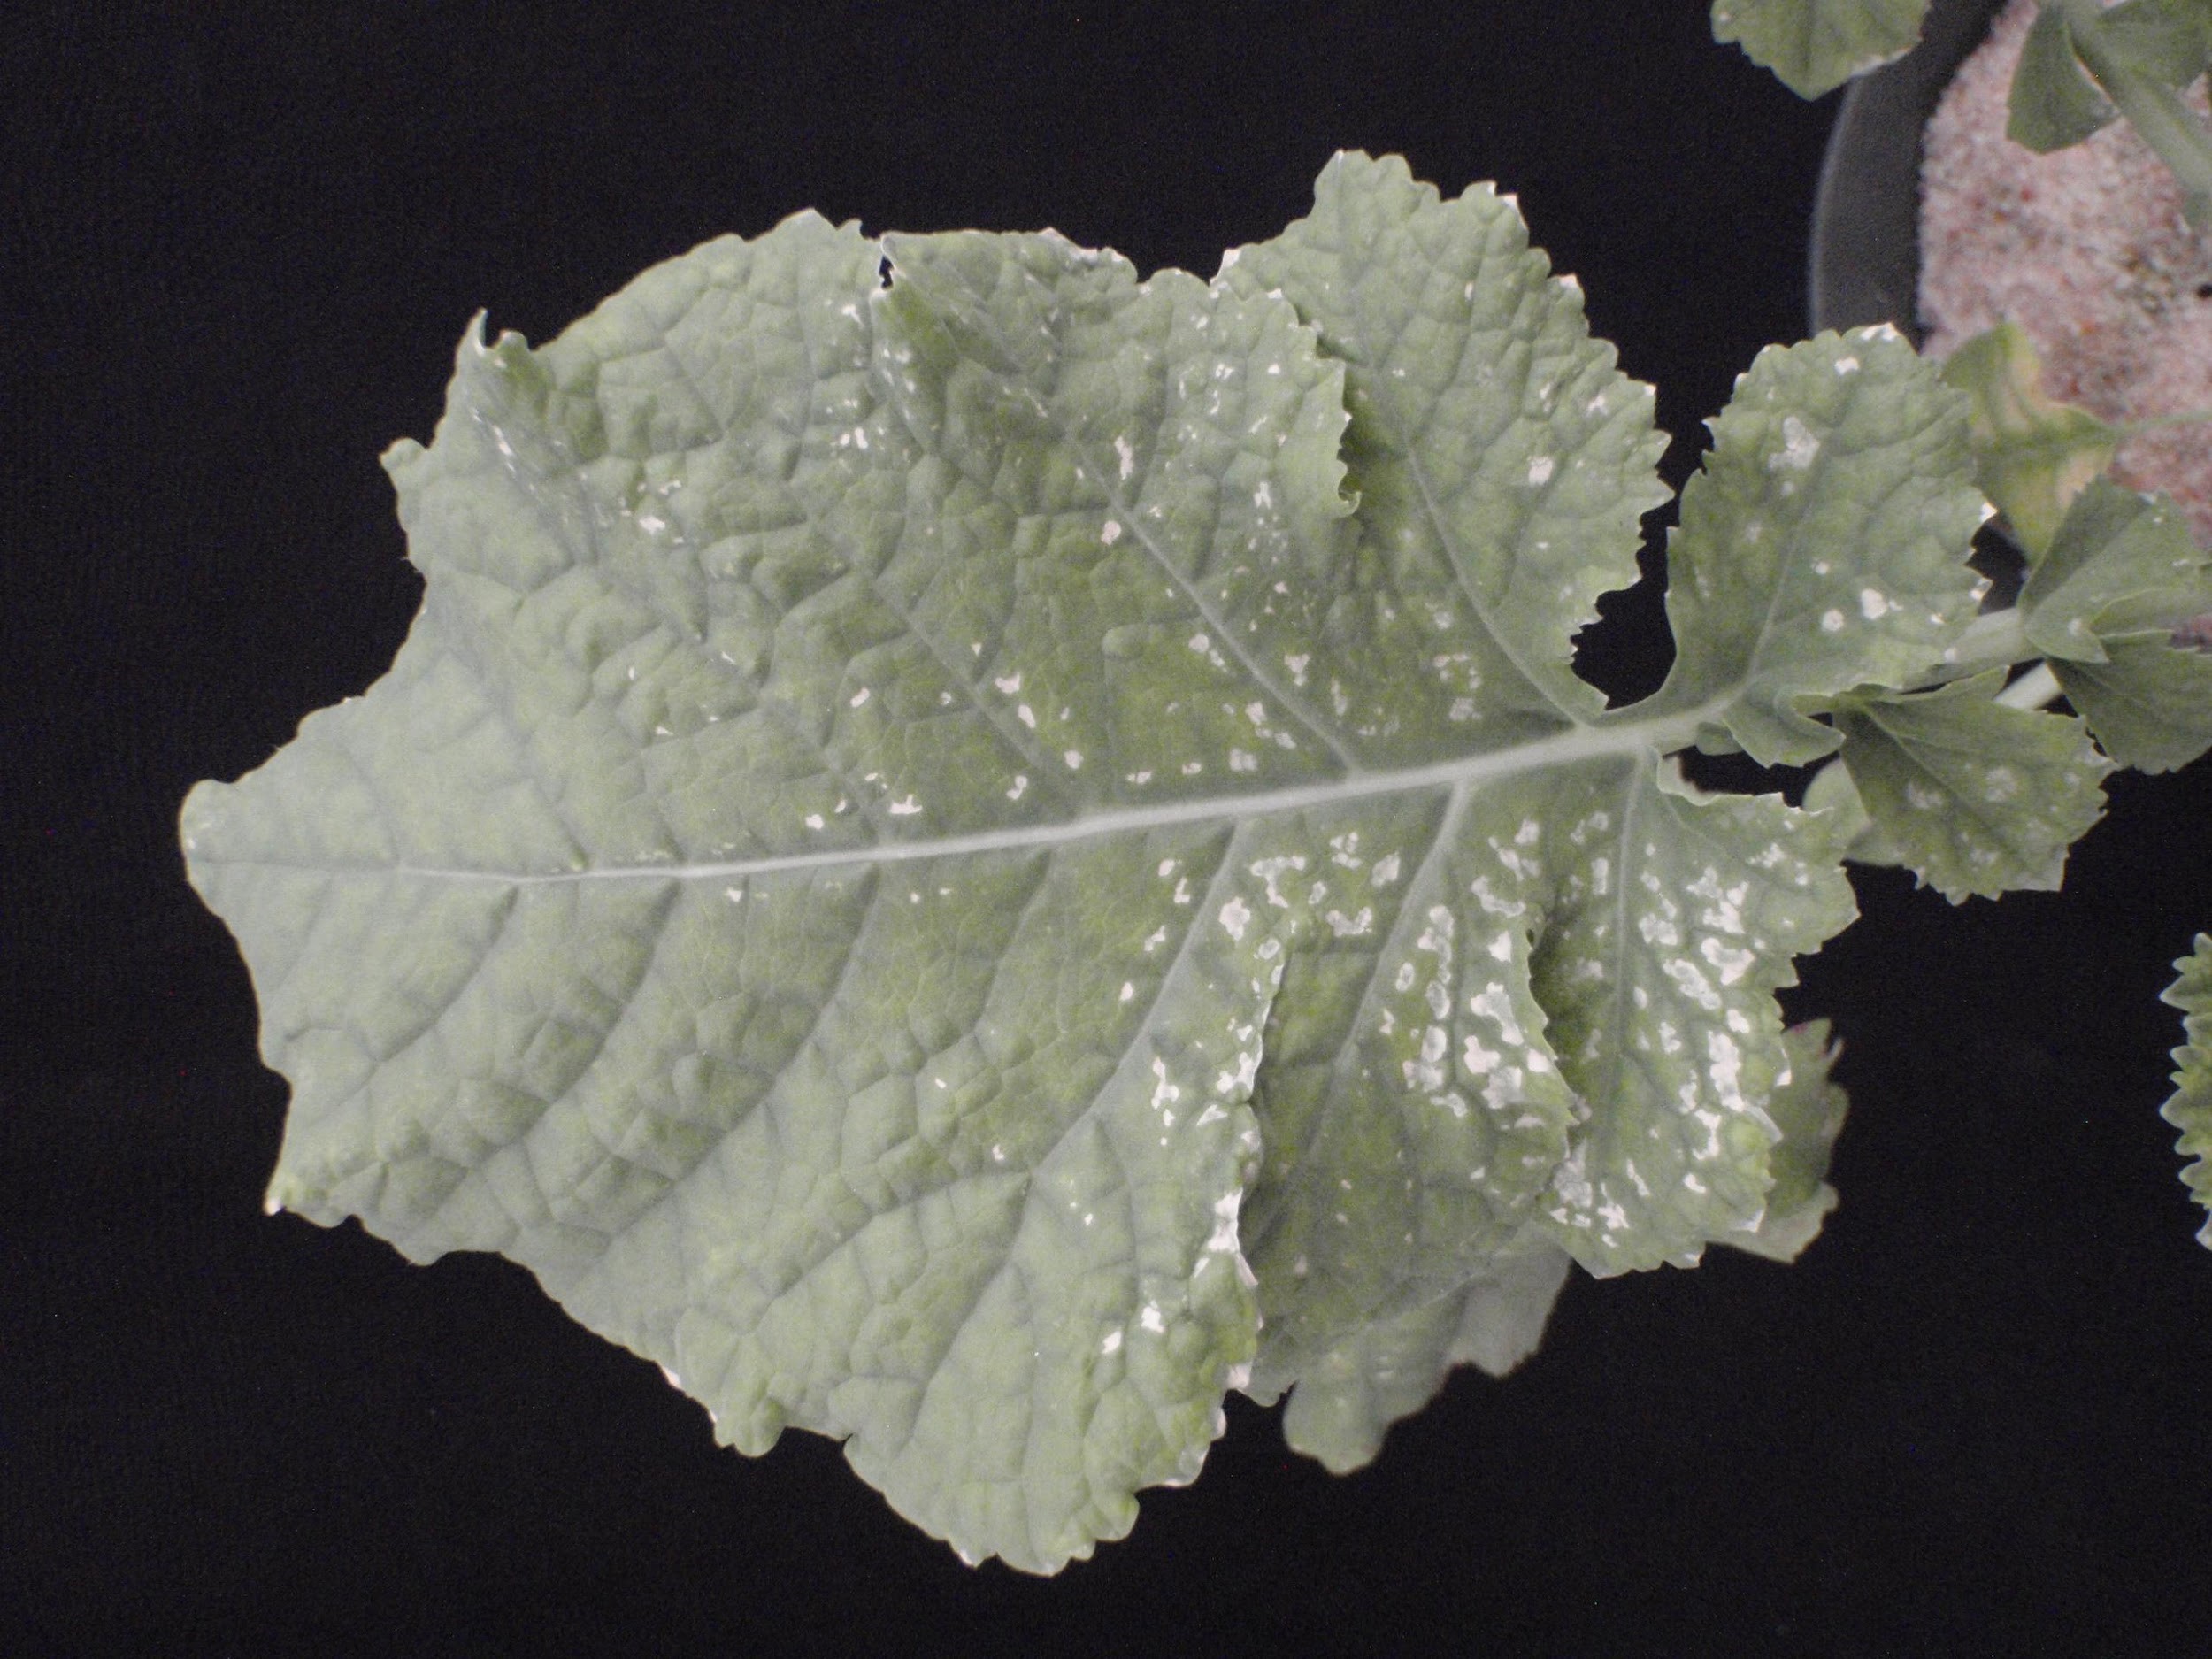 Angular tan lesions on leaf surfaces